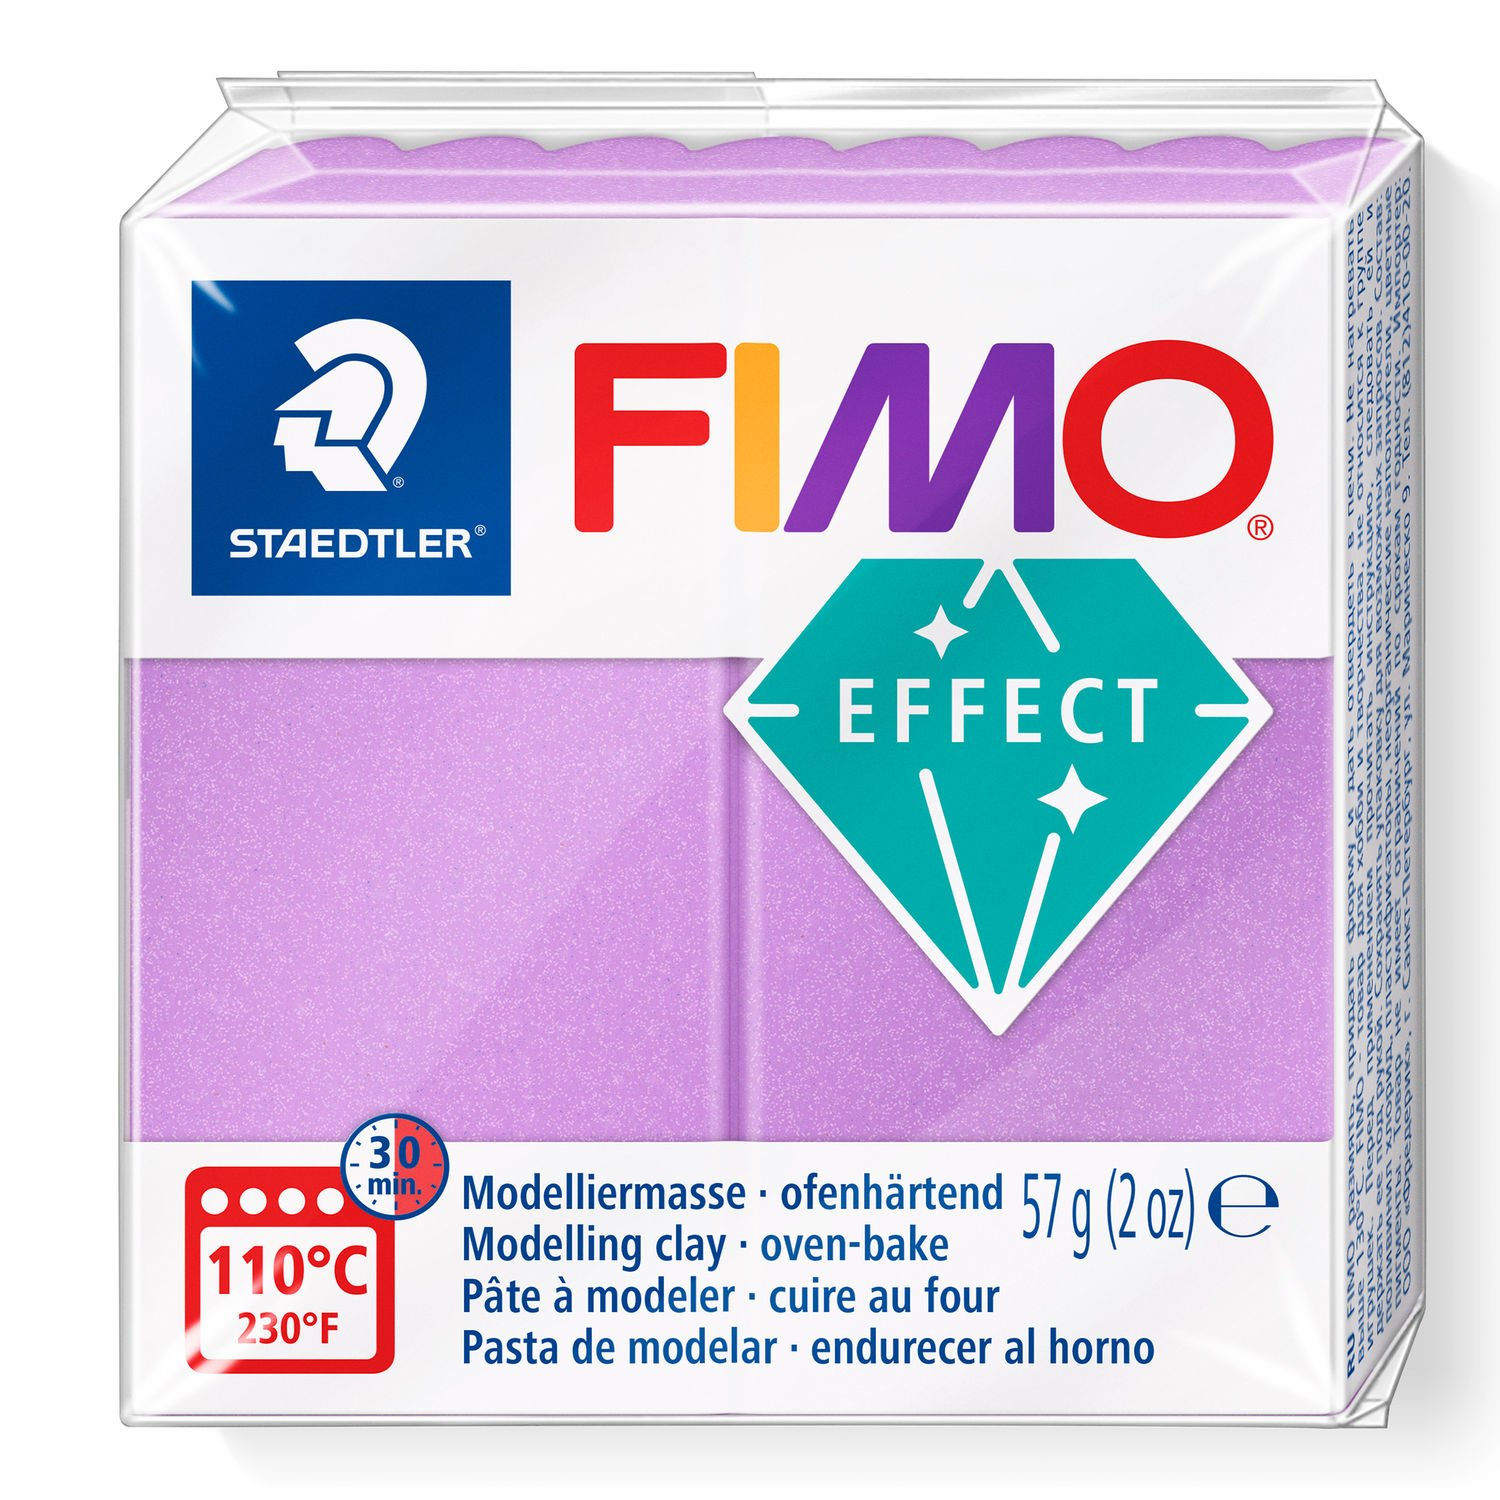 STAEDTLER FIMO 8020 - Knetmasse - Lila - Erwachsene - 1 Stück(e) - Pearl lilac - 1 Farben